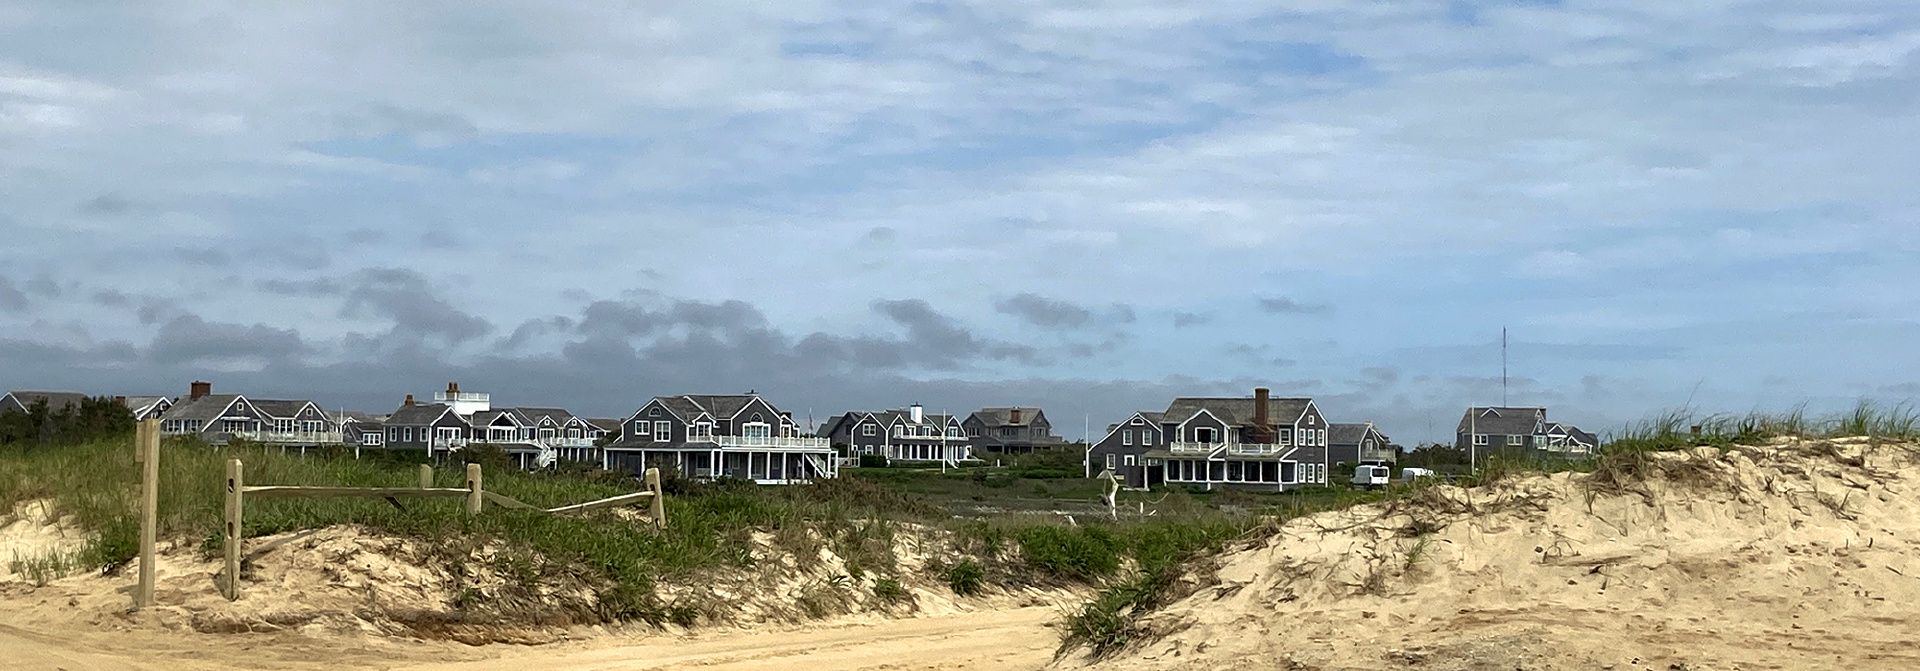 Massachusetts Island Hopper: Nantucket and Martha's Vineyard